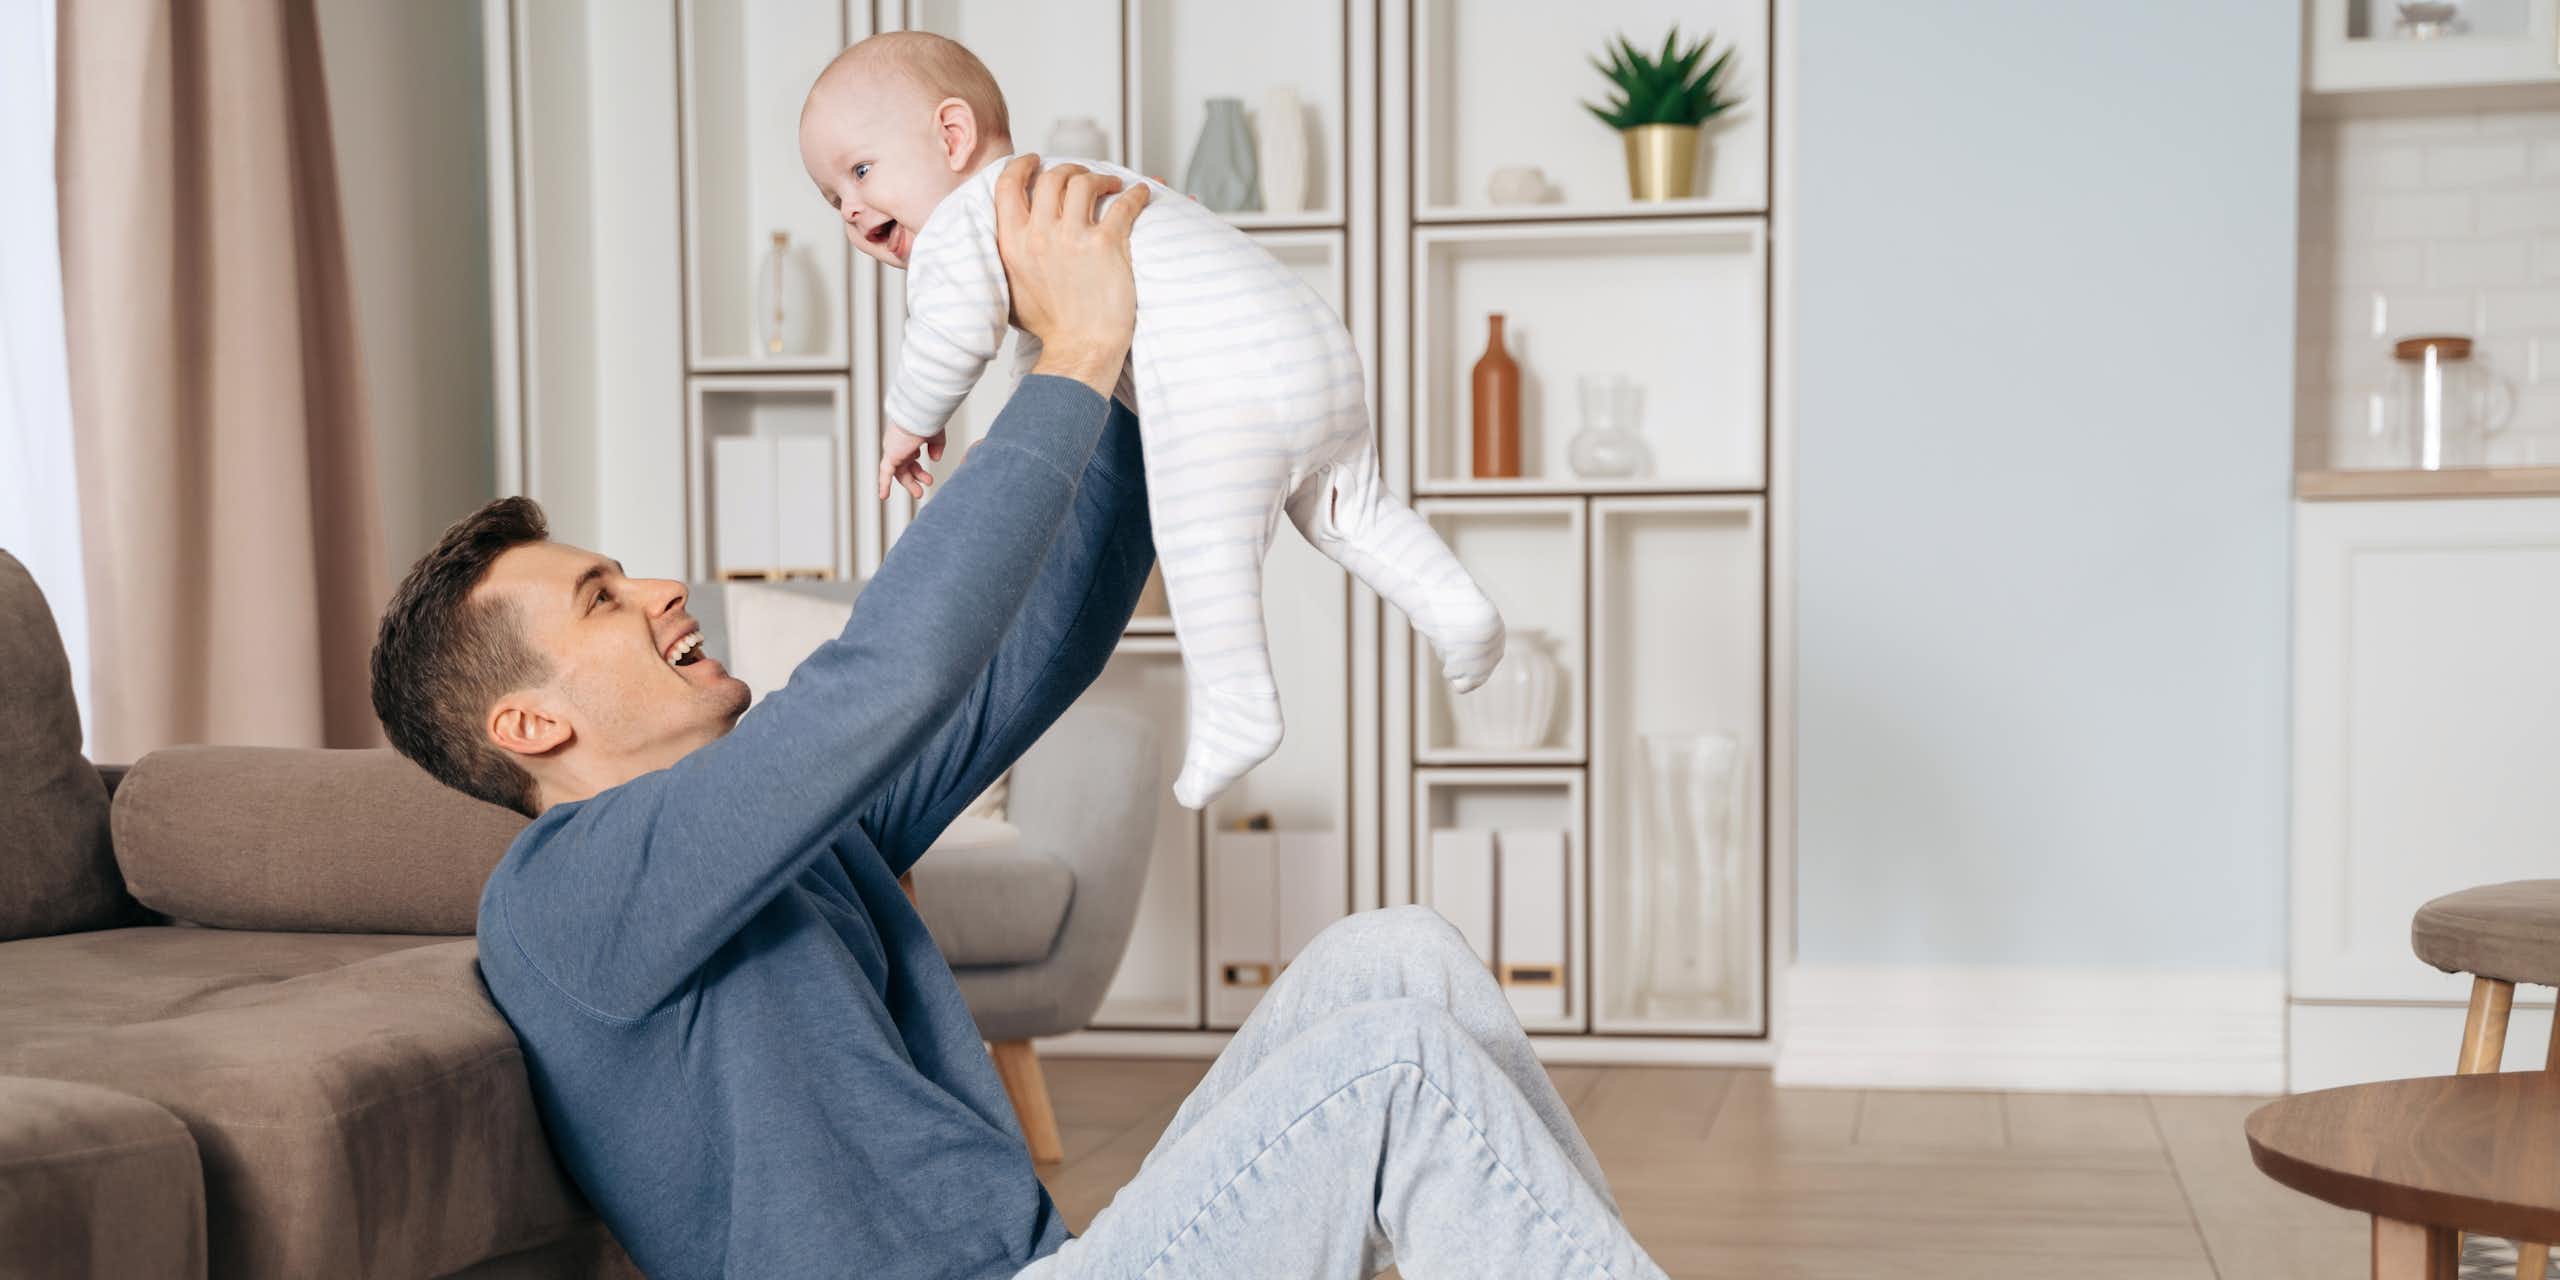 Cuti ayah bermanfaat tidak hanya untuk ibu dan bayi, tapi juga organisasi, kebijakan publik, dan perekonomian keluarga